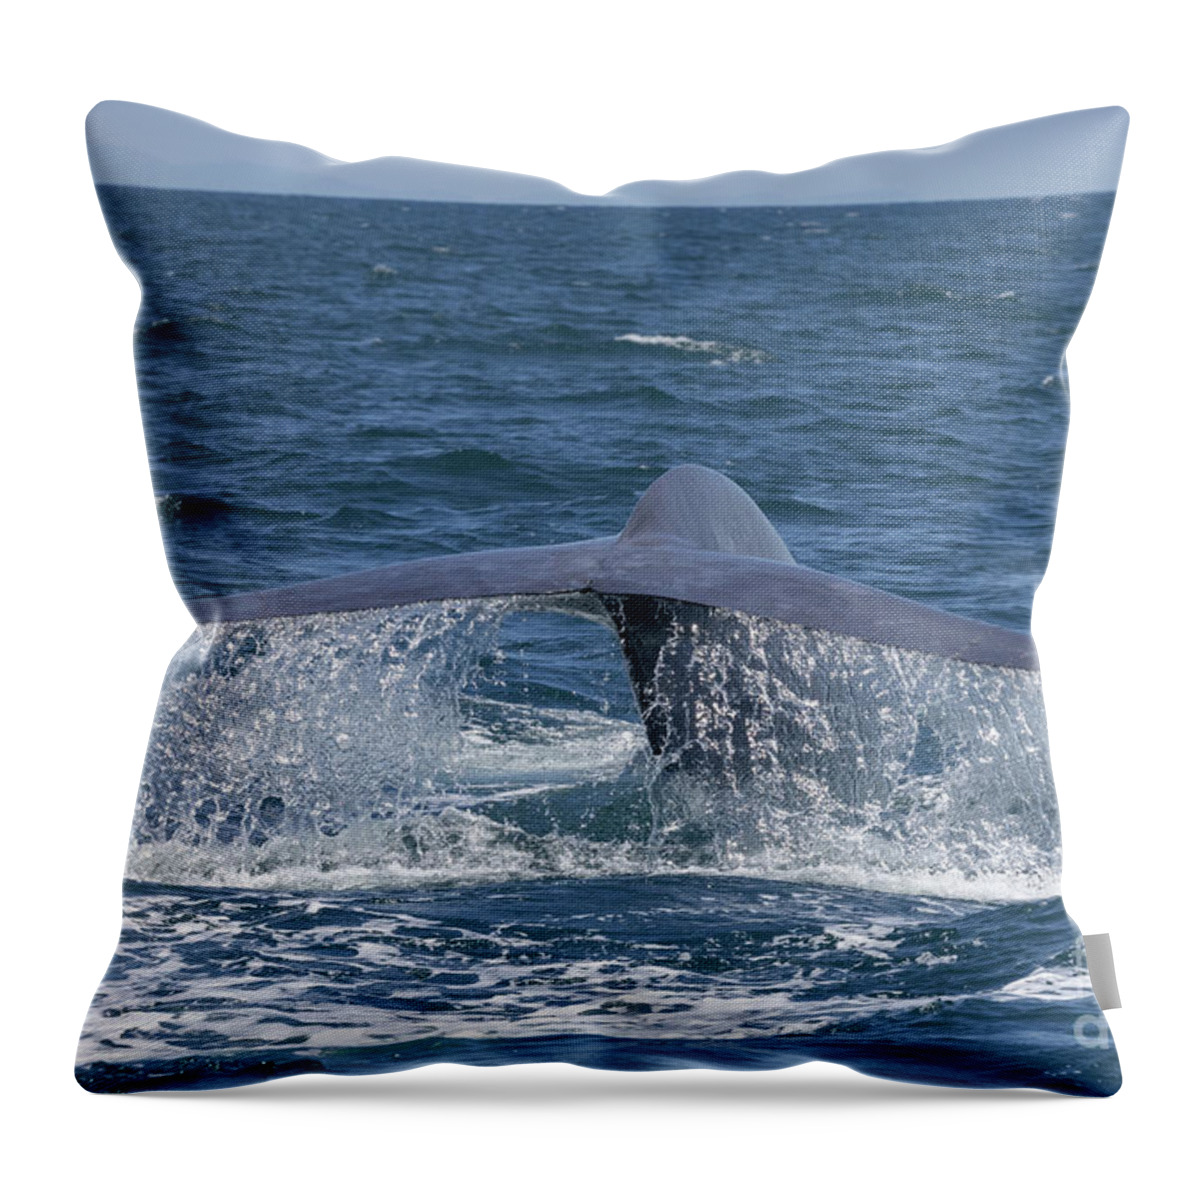 Dana Wharf Throw Pillow featuring the photograph Blue Whale Fluke Waterfall by Loriannah Hespe